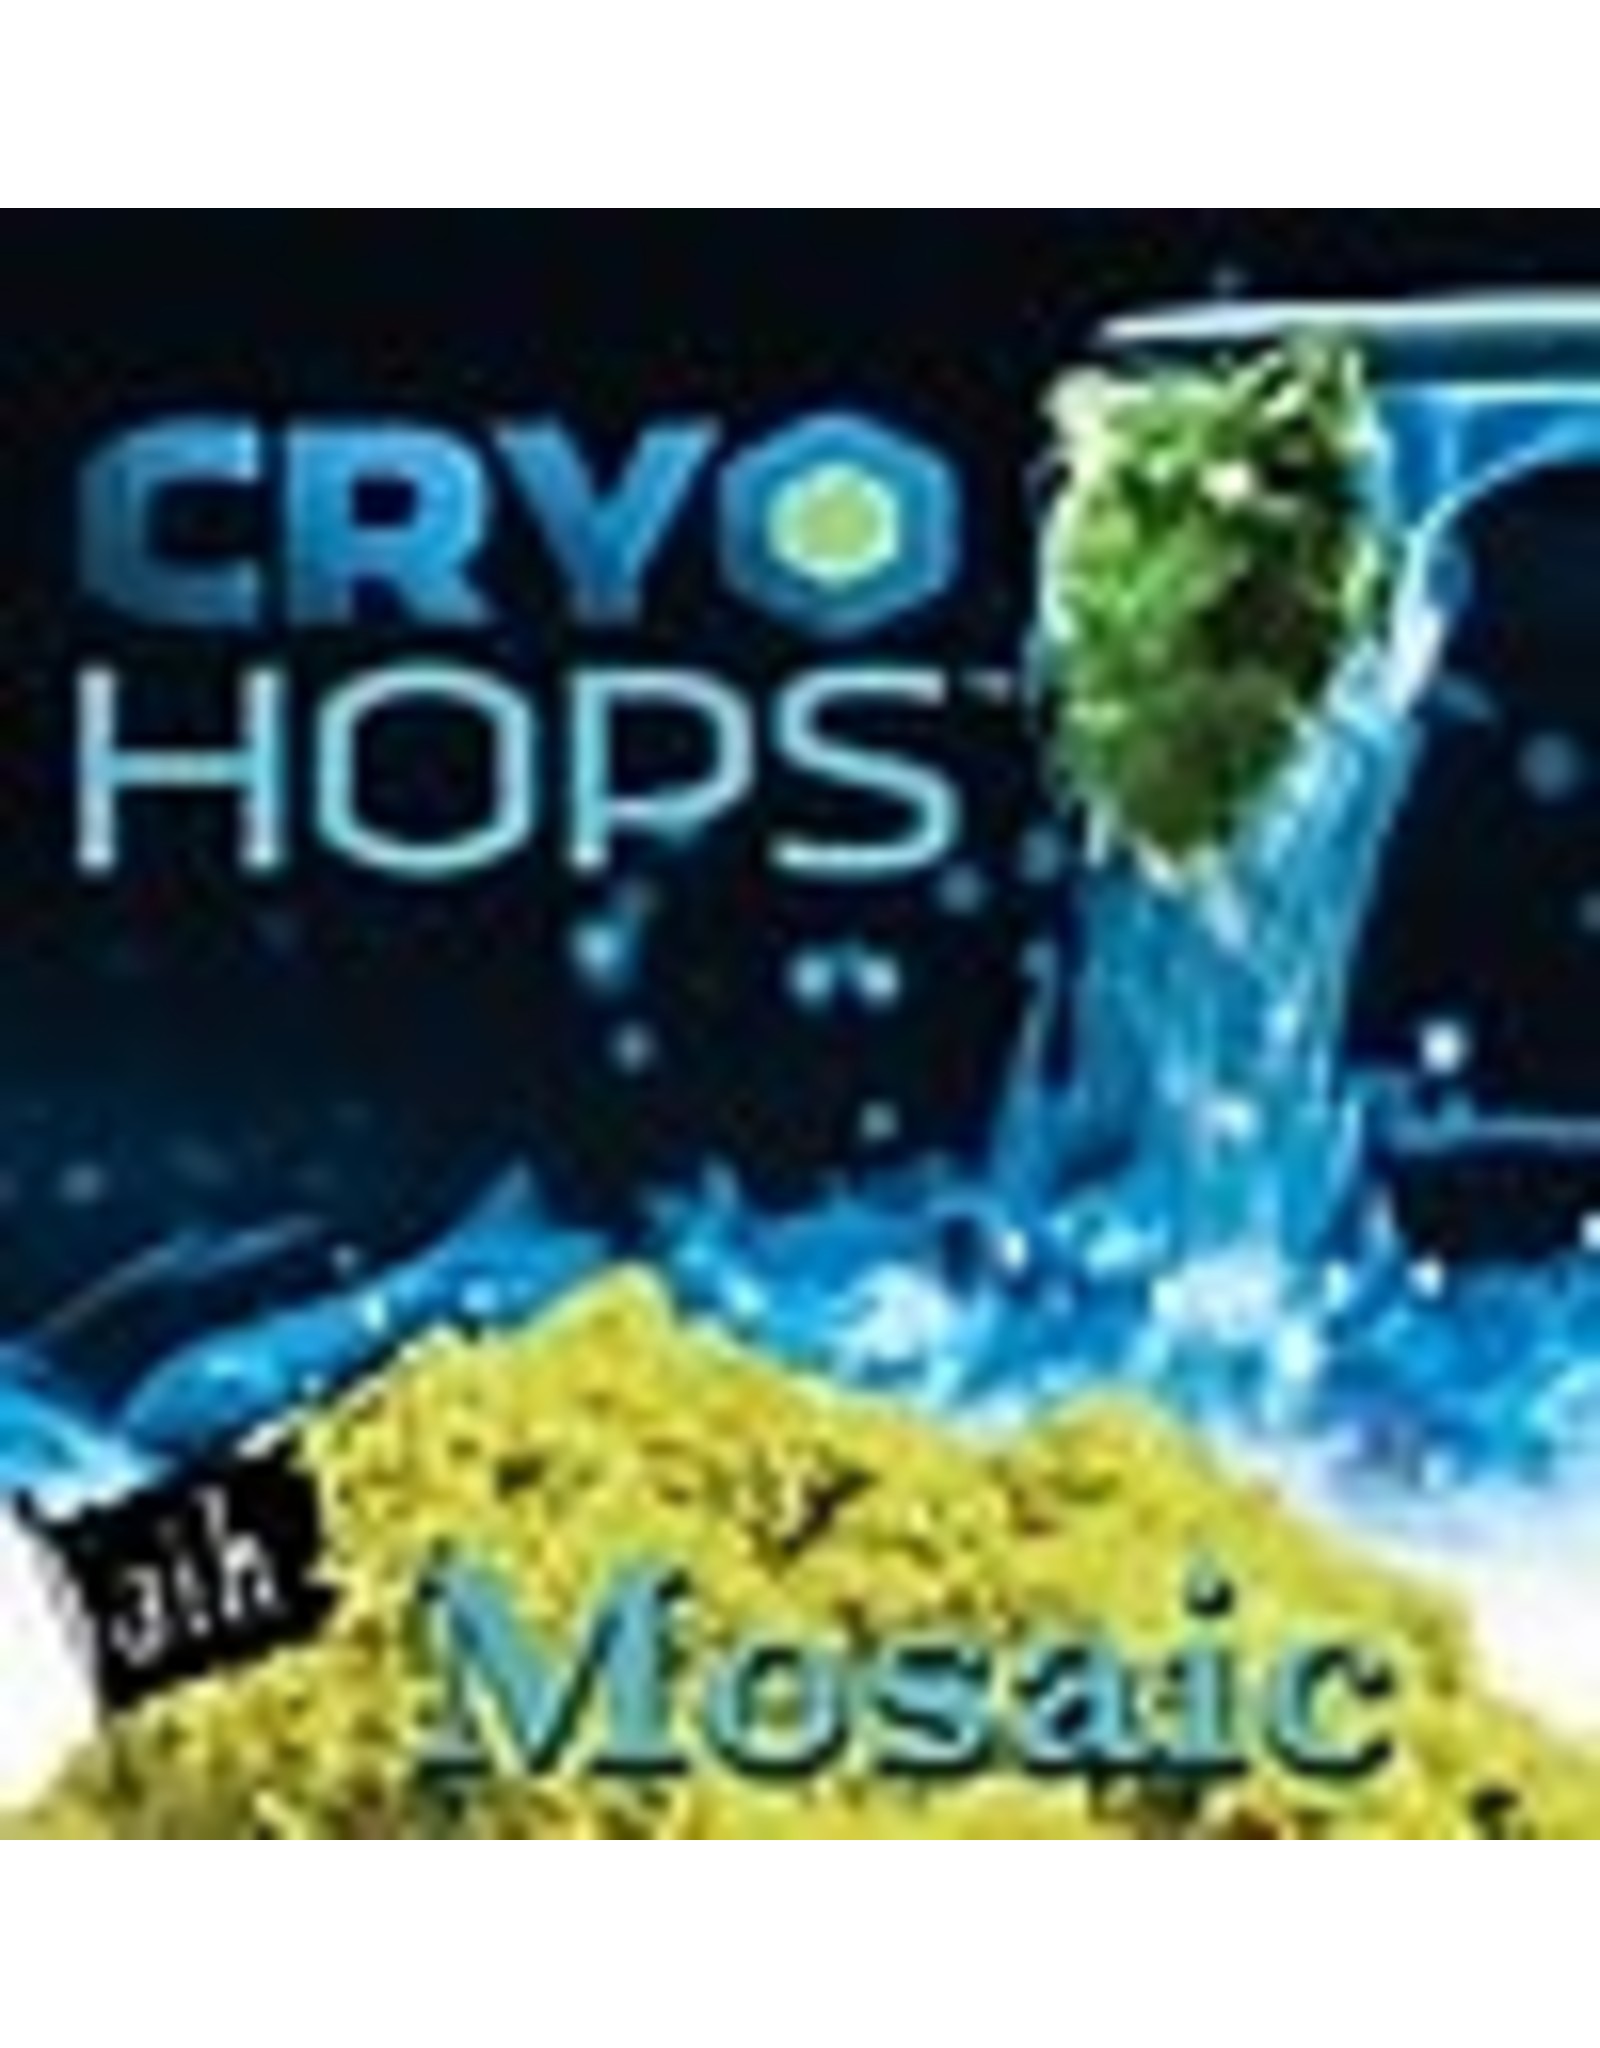 Yakima chief Mosaic CRYO hops 1 oz